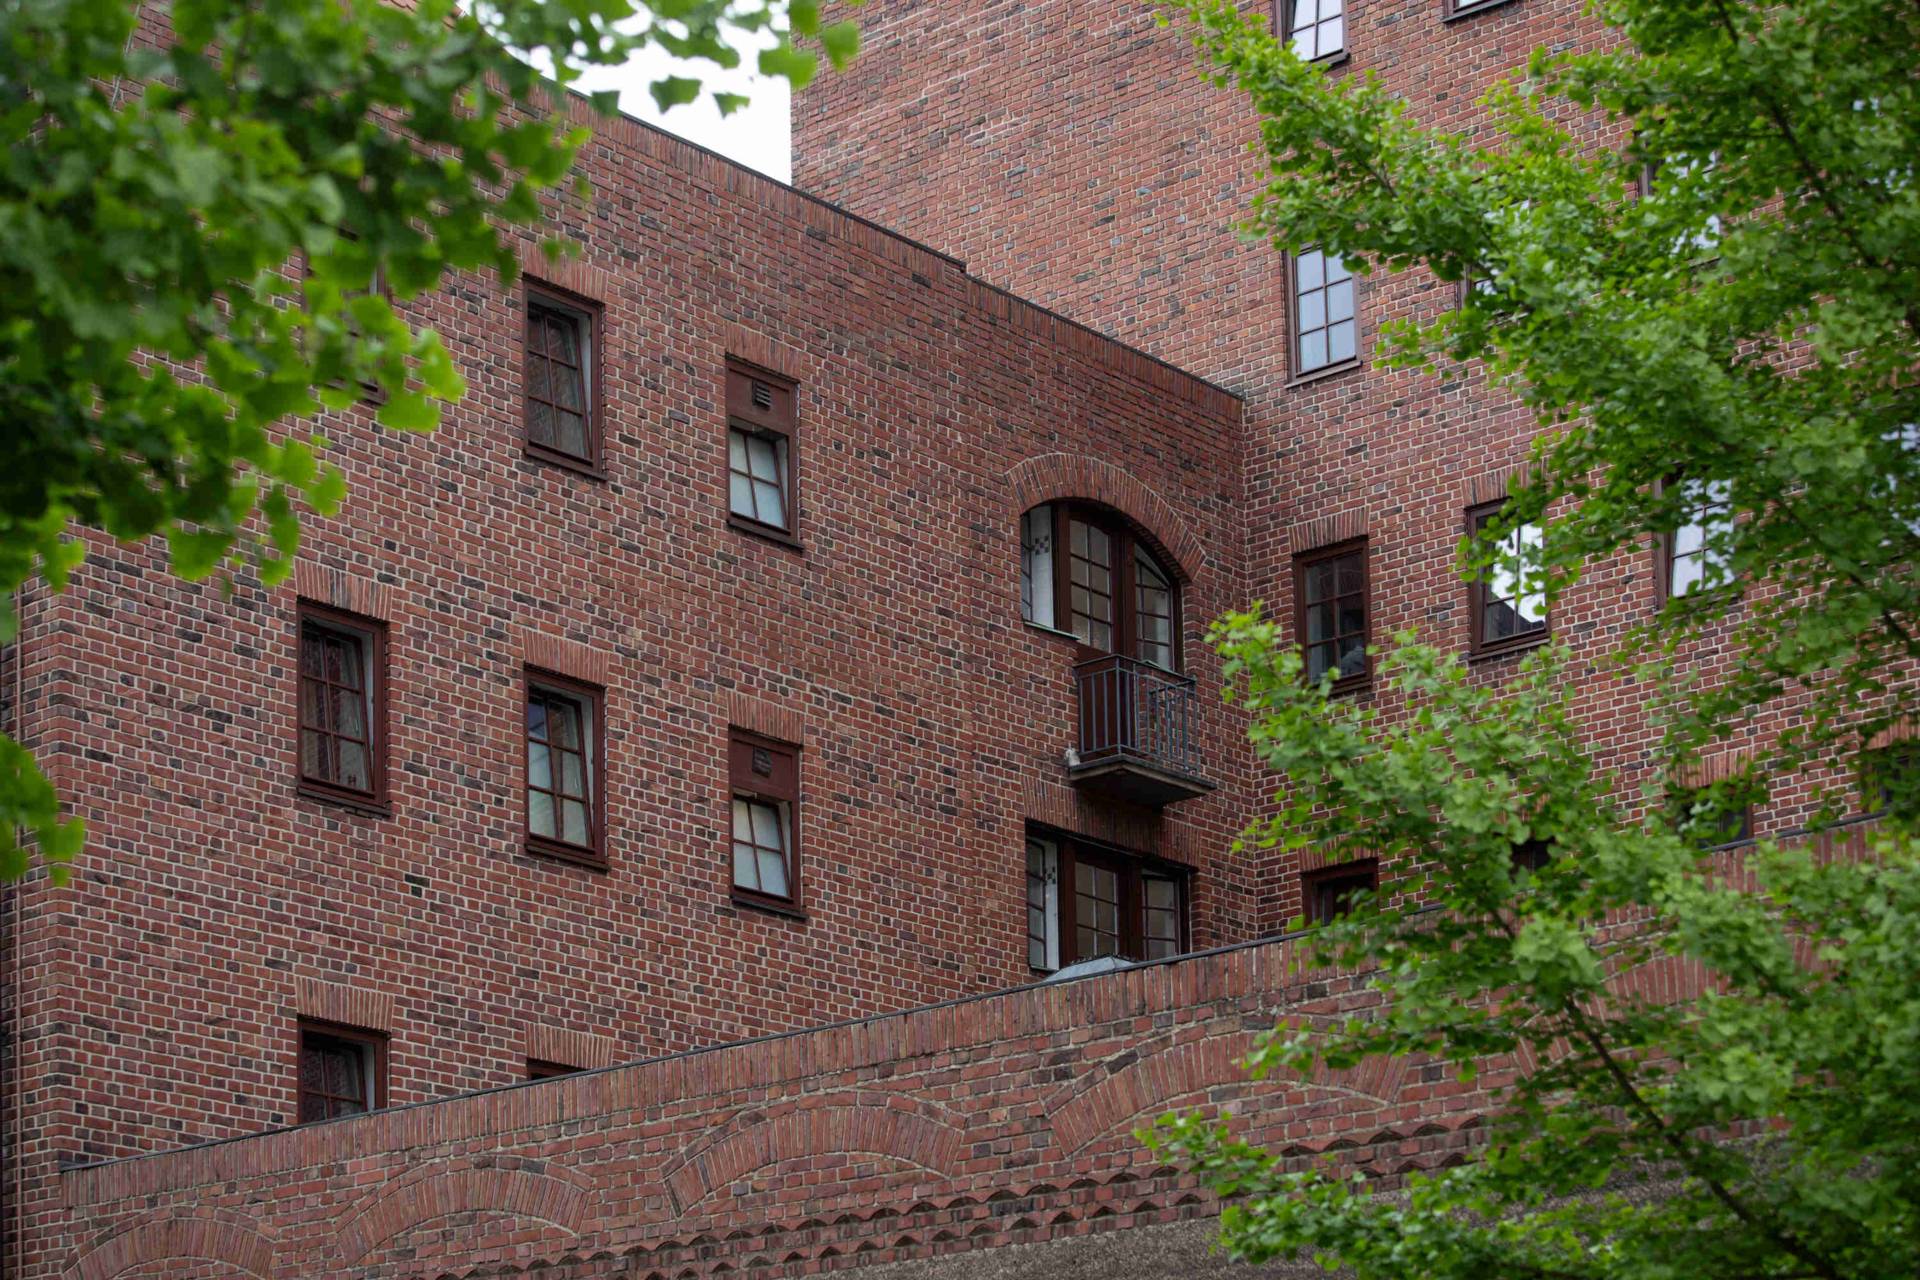 Bauhaus Architecture Simply Munich